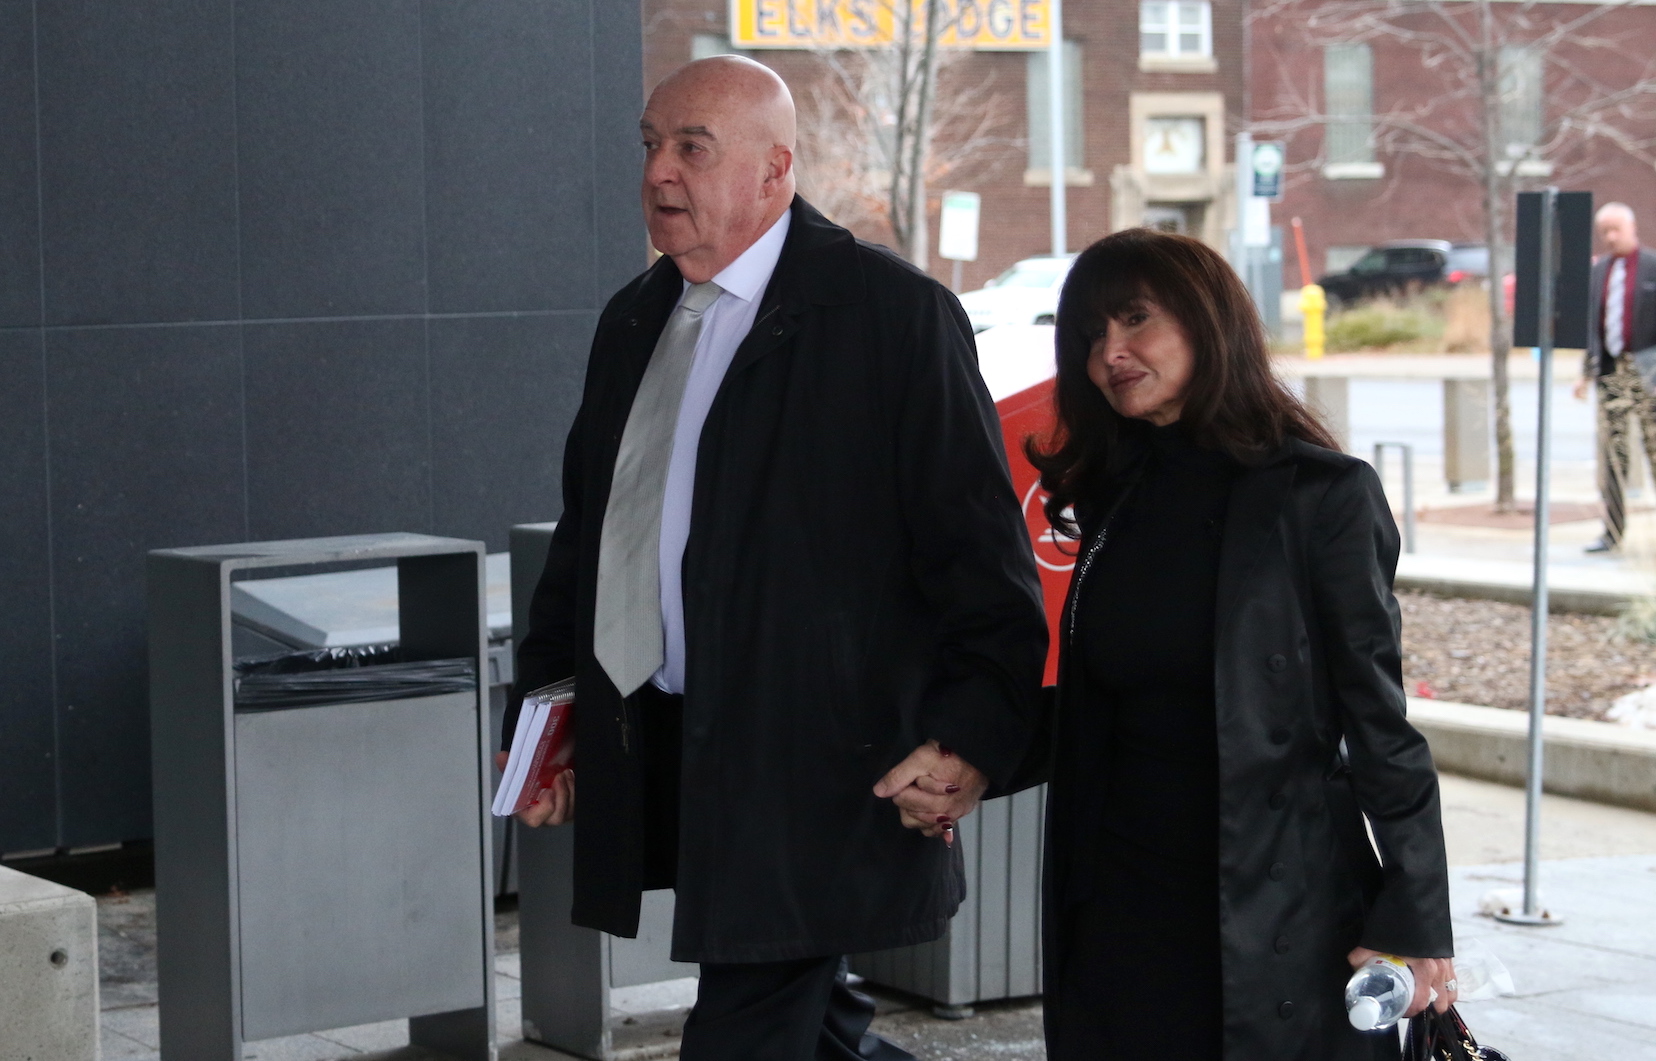 Extortion case against former Thunder Bay mayor Keith Hobbs is underway in court - Sudbury.com